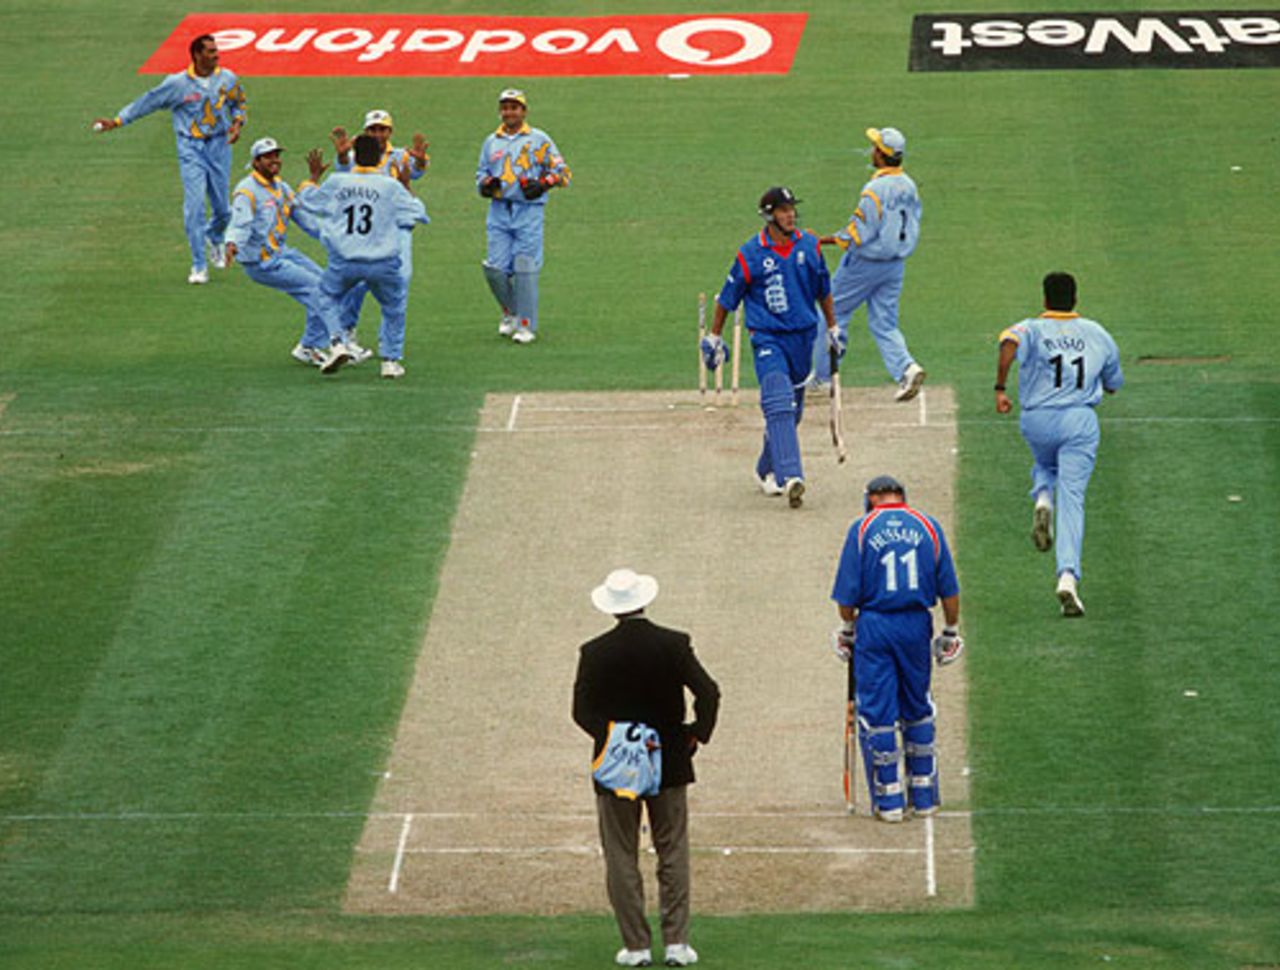 Debasis Mohanty celebrates bowling Graeme Hick first ball, 25th match: India v Pakistan, World Cup, Birmingham, May 30, 1999